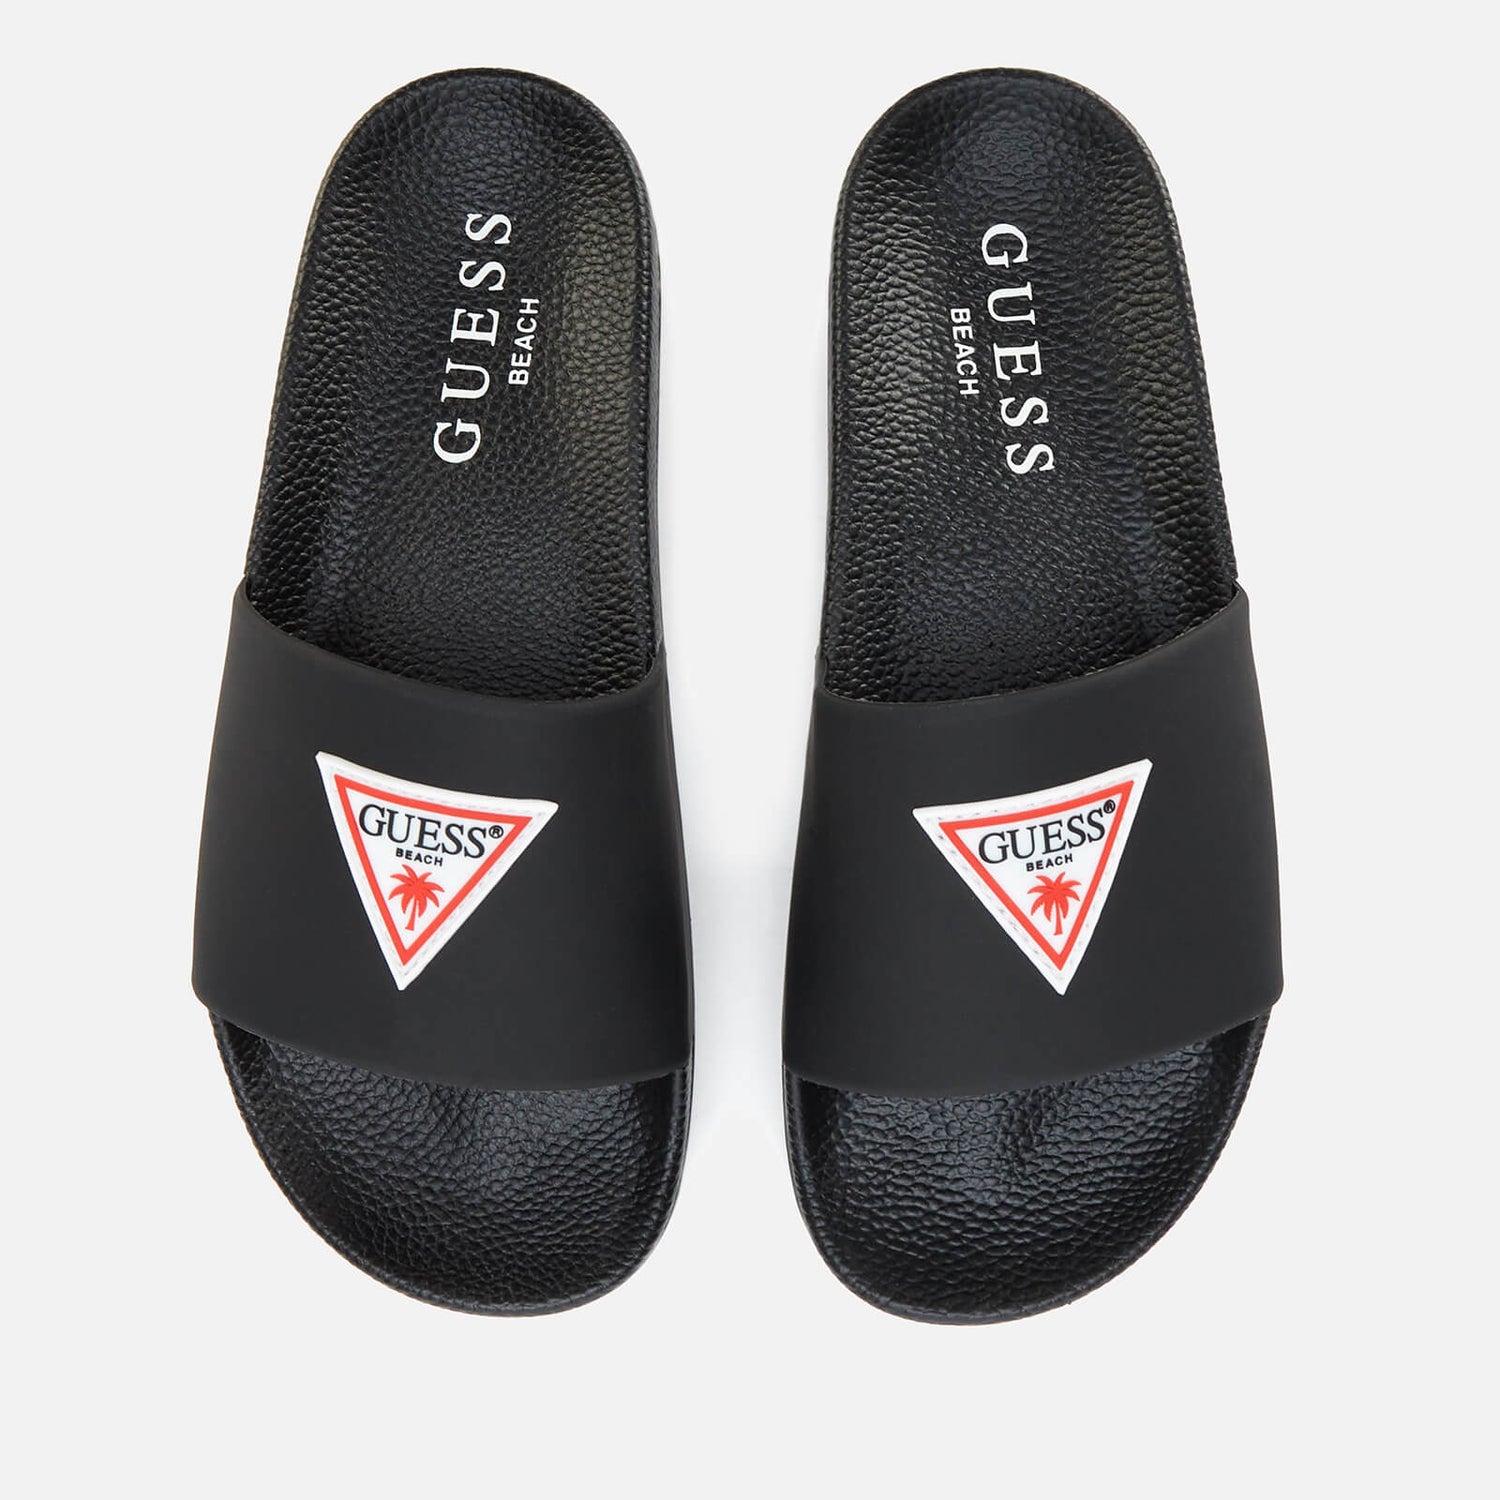 Guess Women's Slide Sandals - Black - UK 3